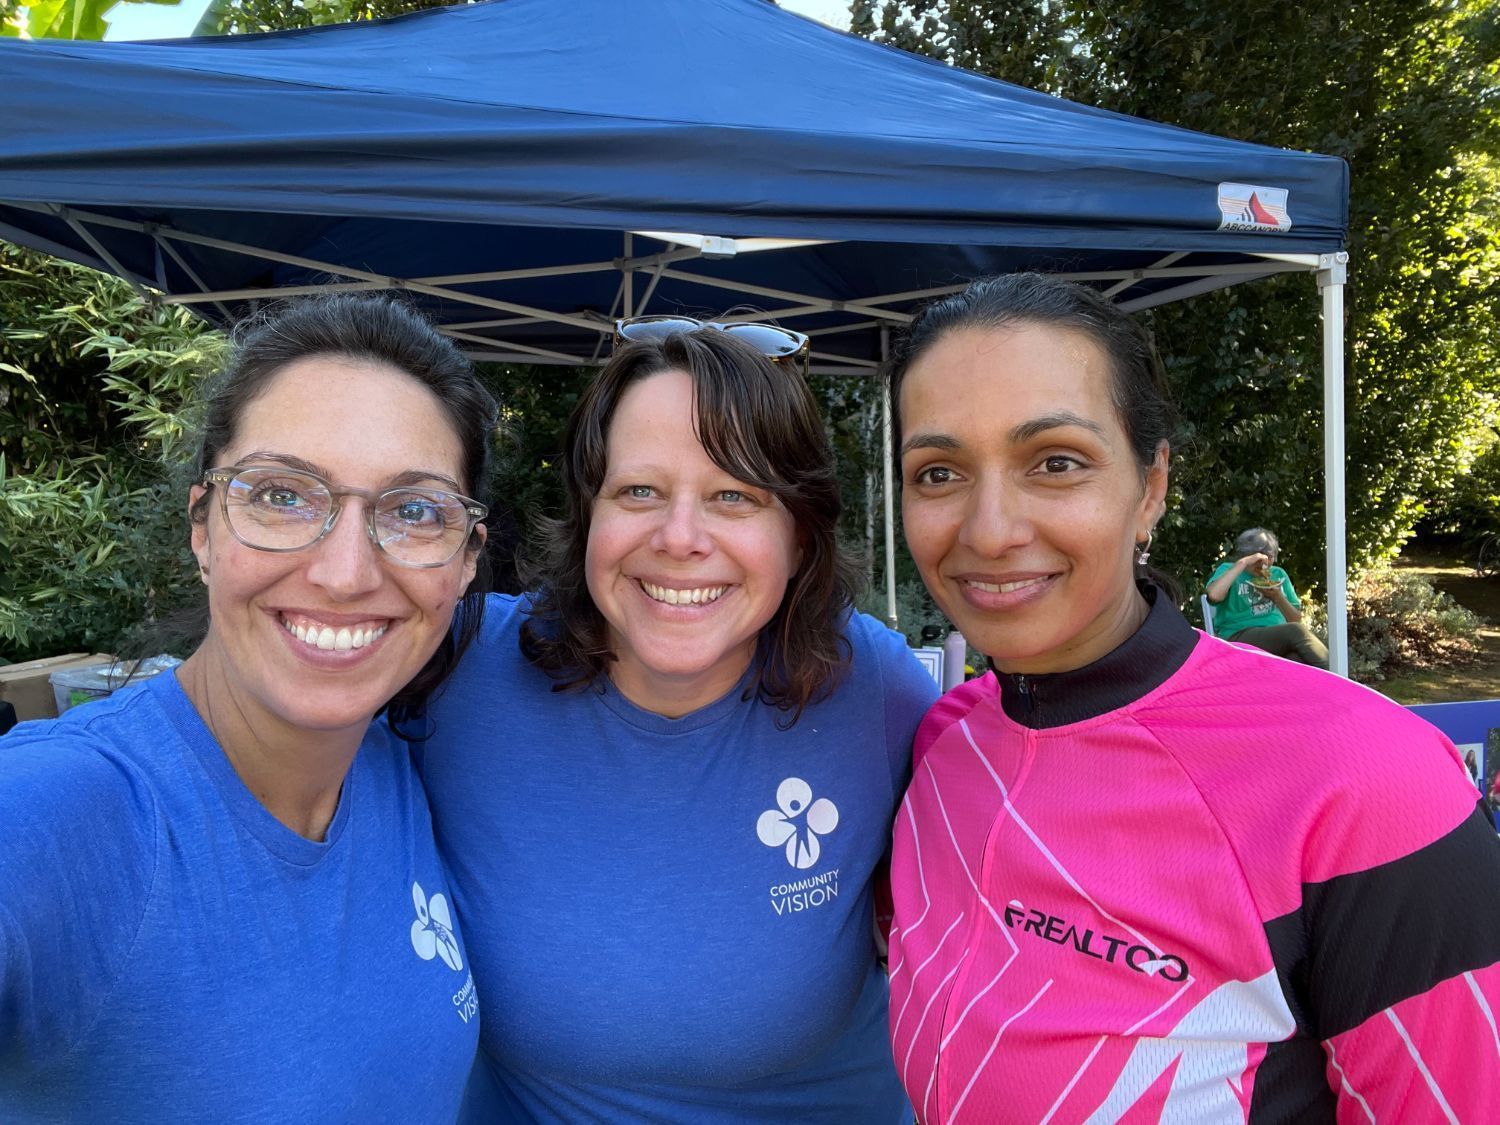 Three women smiling wearing Community Vision shirts.